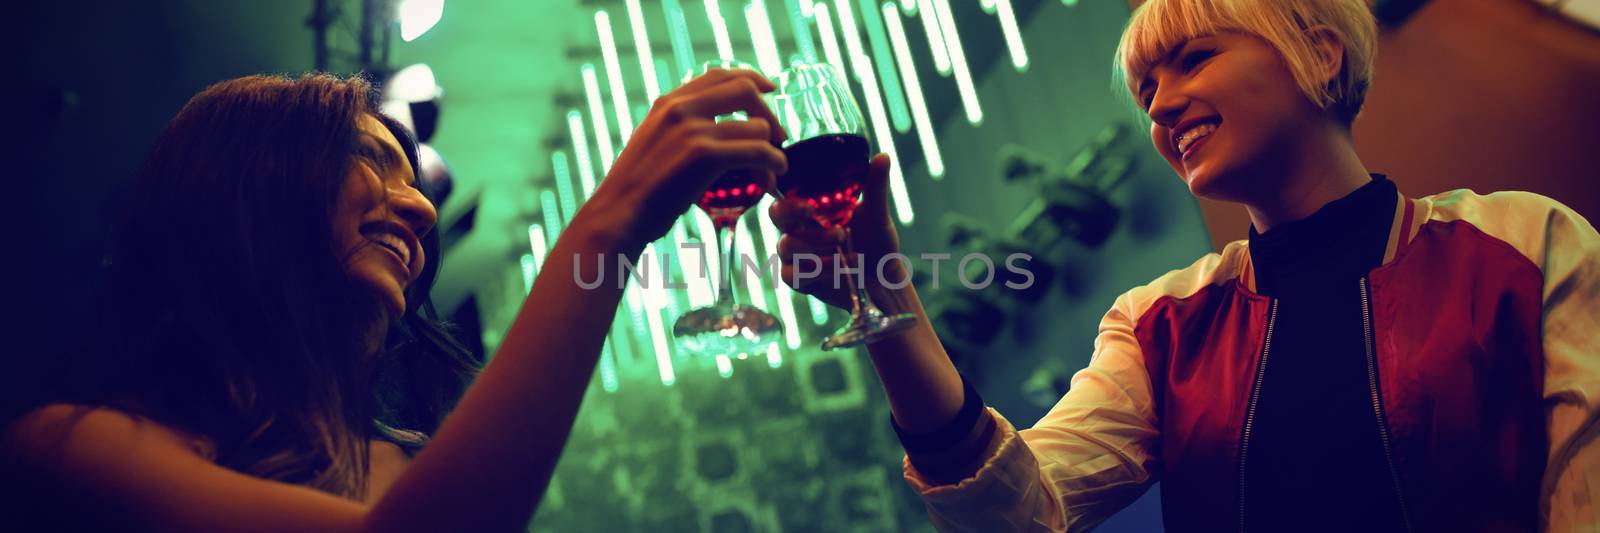 Friends toasting wine glasses in bar by Wavebreakmedia